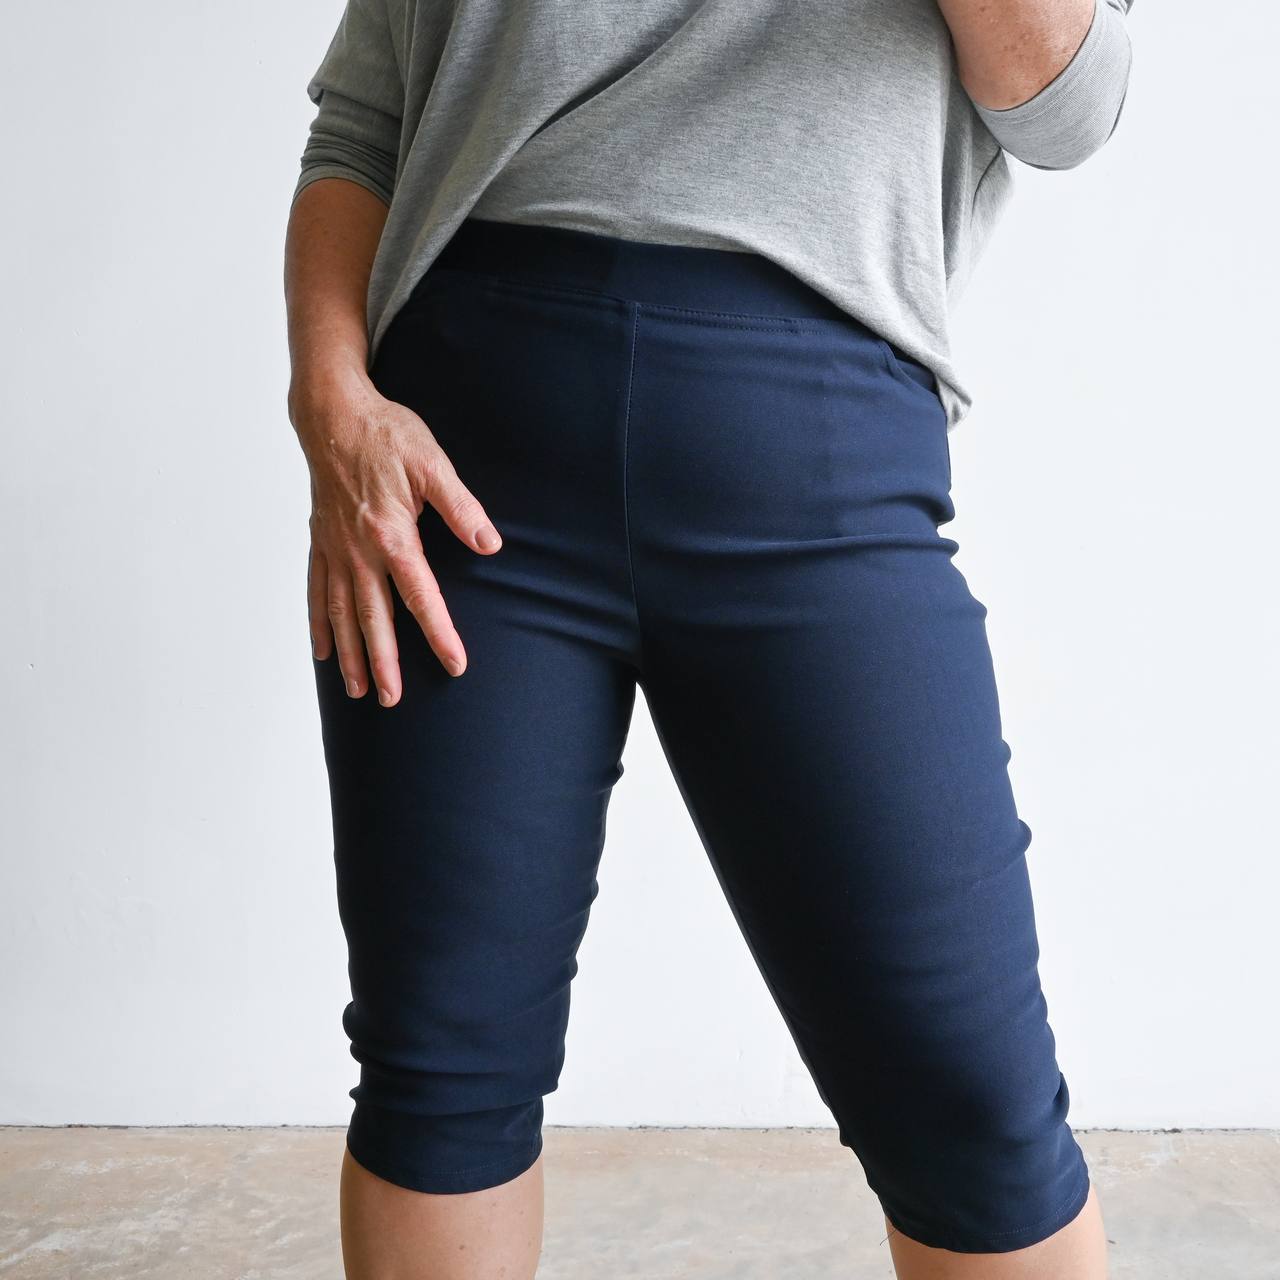 Cropped & Capri Pants for Women